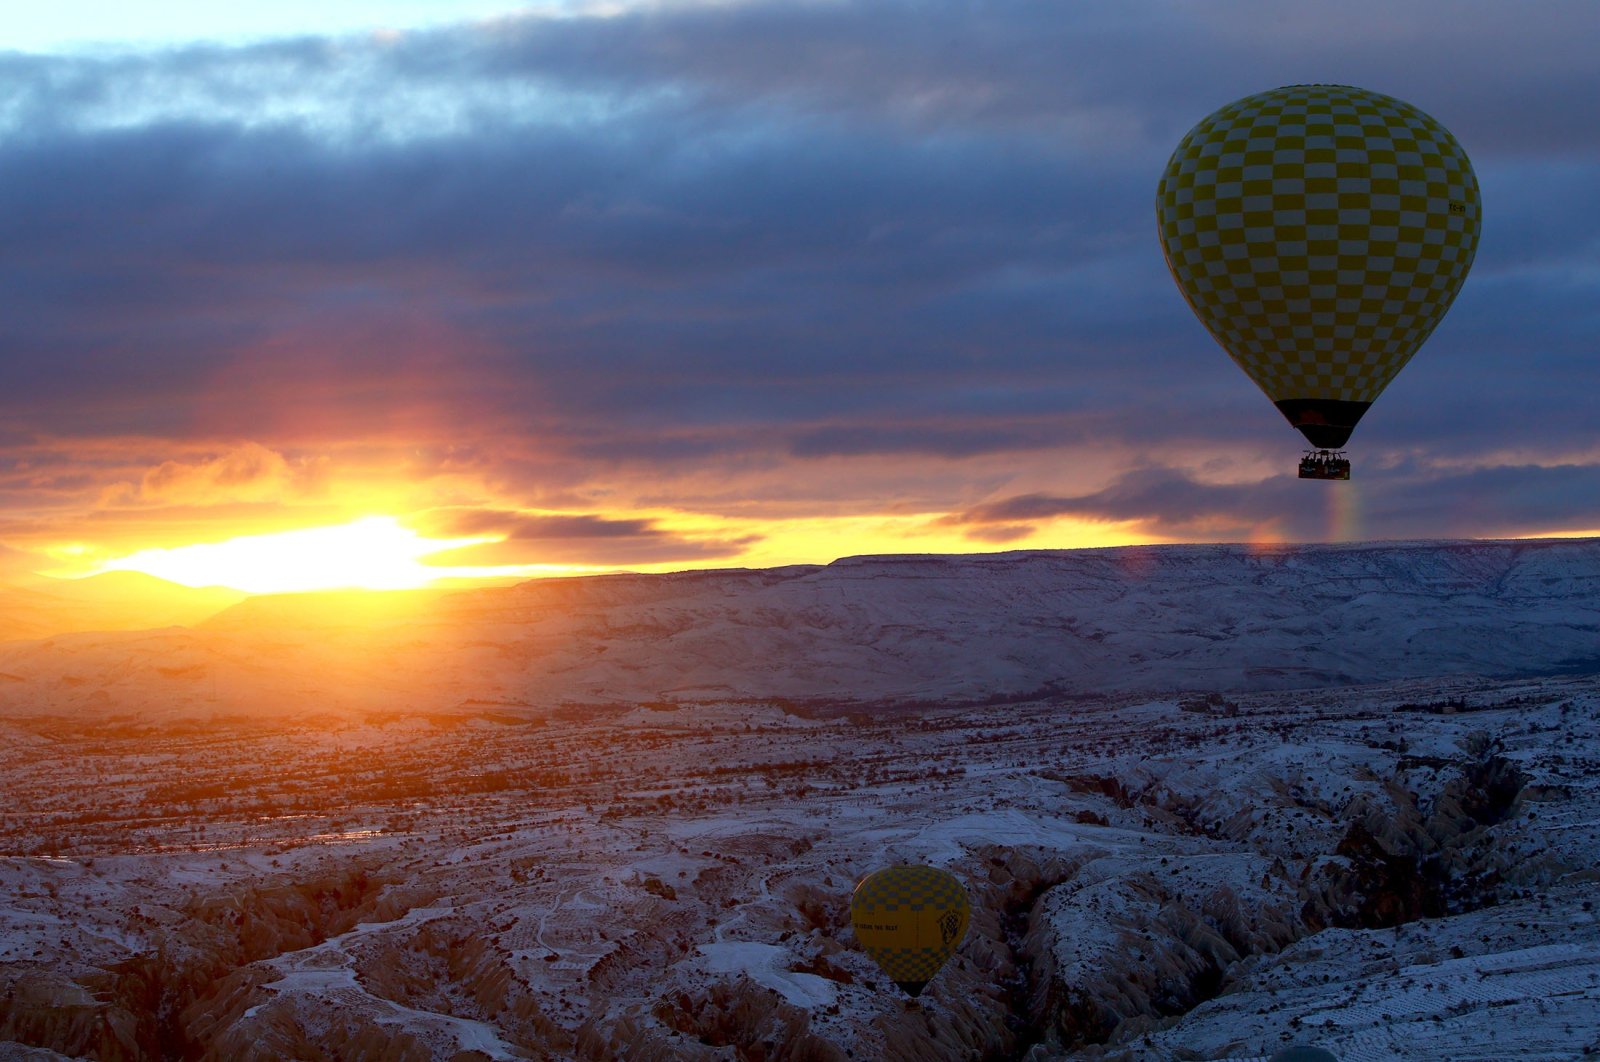 Salju menyelimuti cerobong peri di alam ajaib Cappadocia